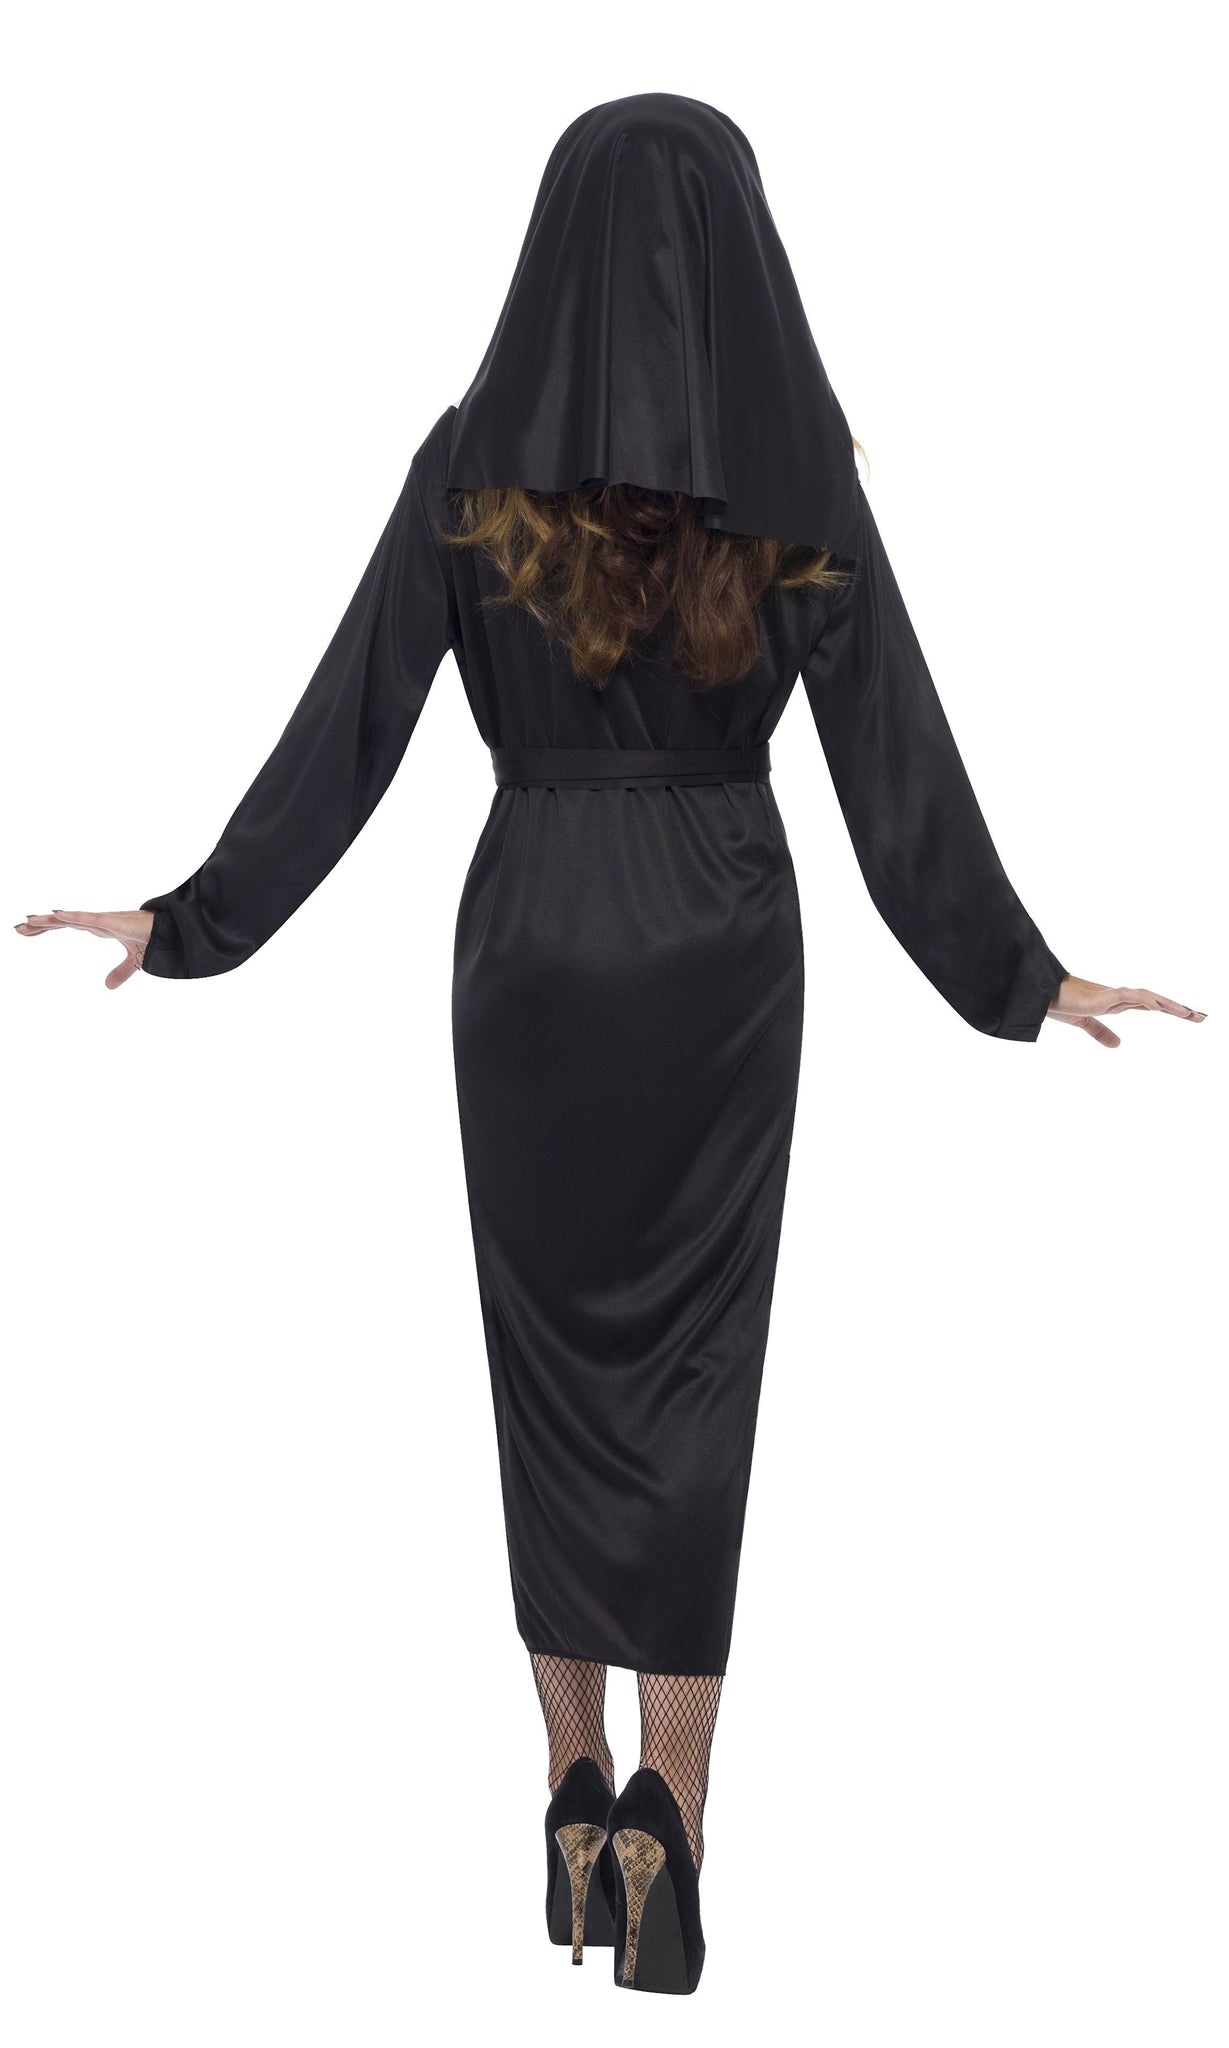 Back of nun dress with headpiece and waist sash